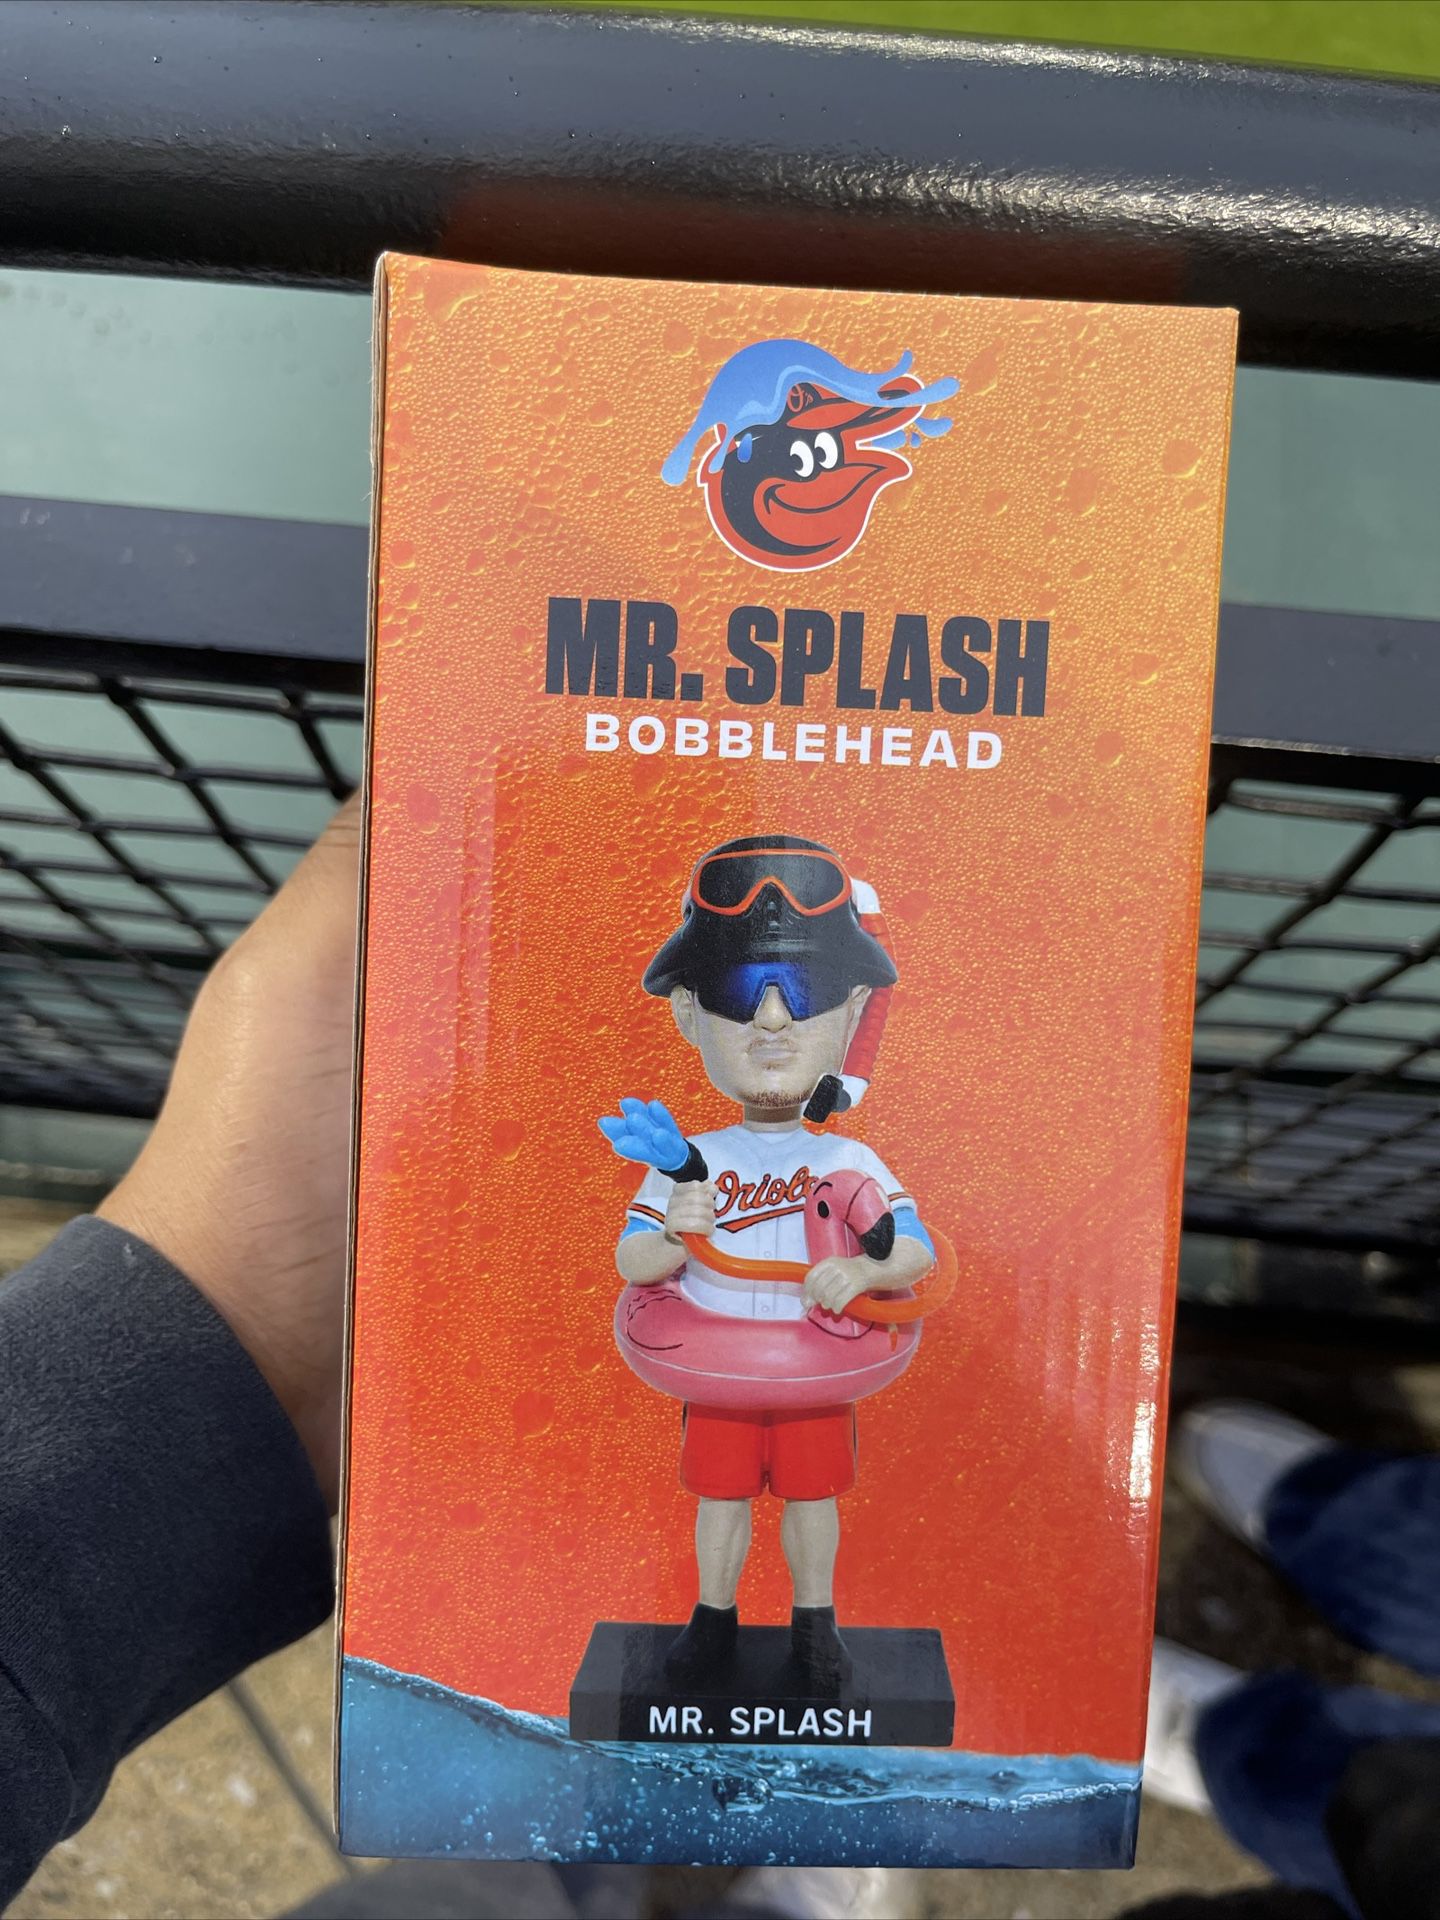 Mr. Splash bobblehead